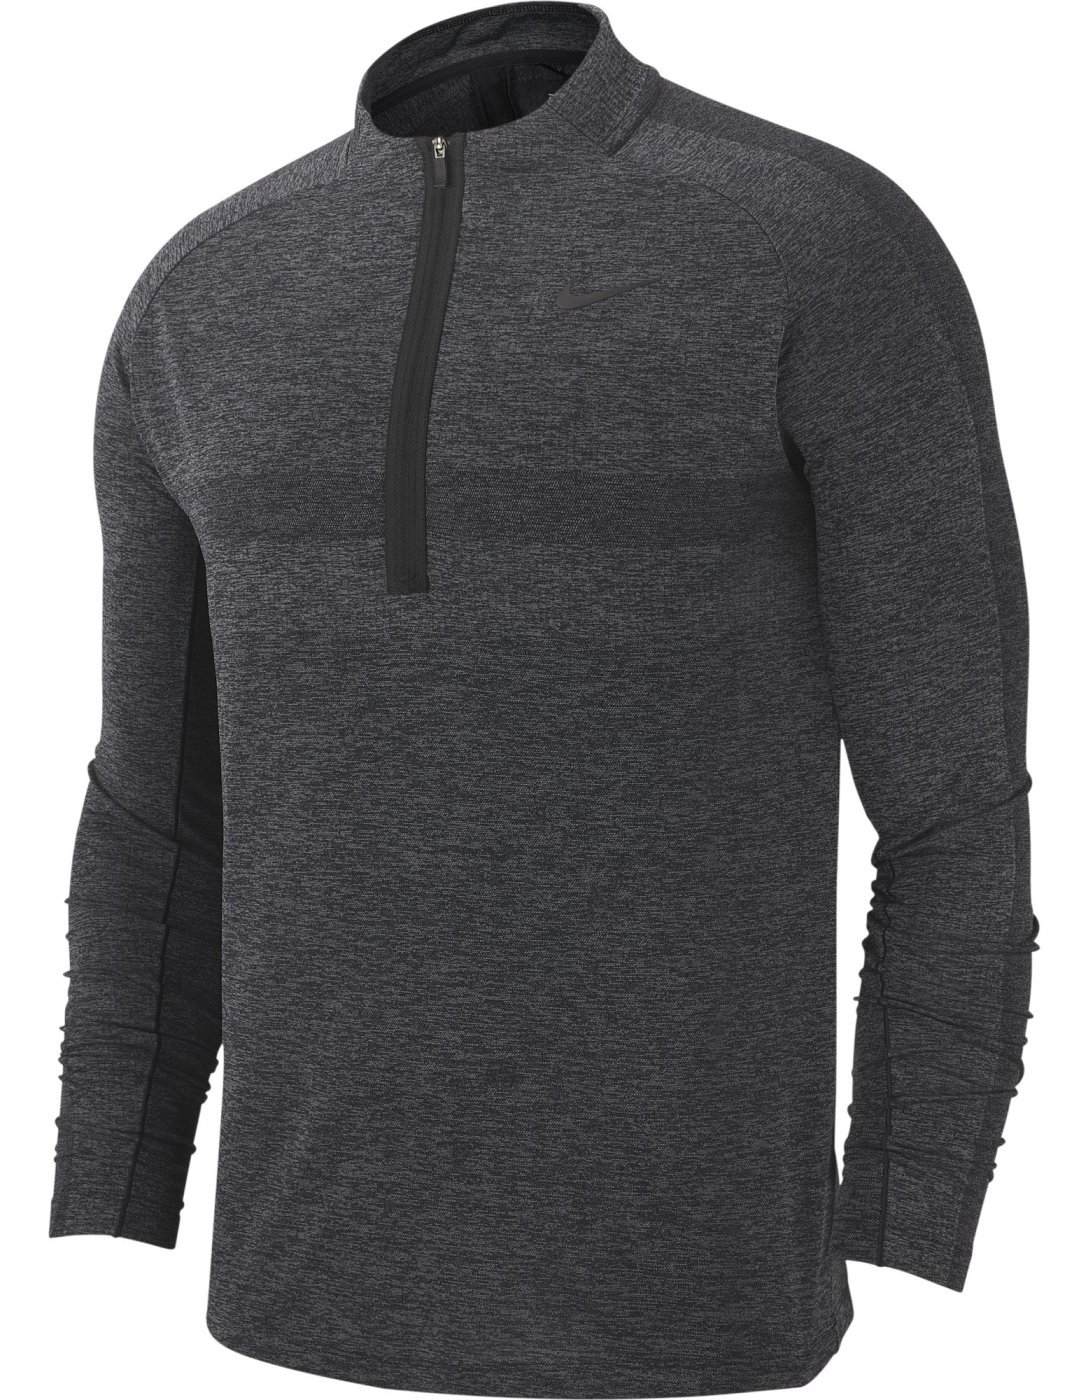 Hoodie/Sweater Nike Dry Knit Statement 1/2 Zip Mens Sweater Black/Dark Grey S